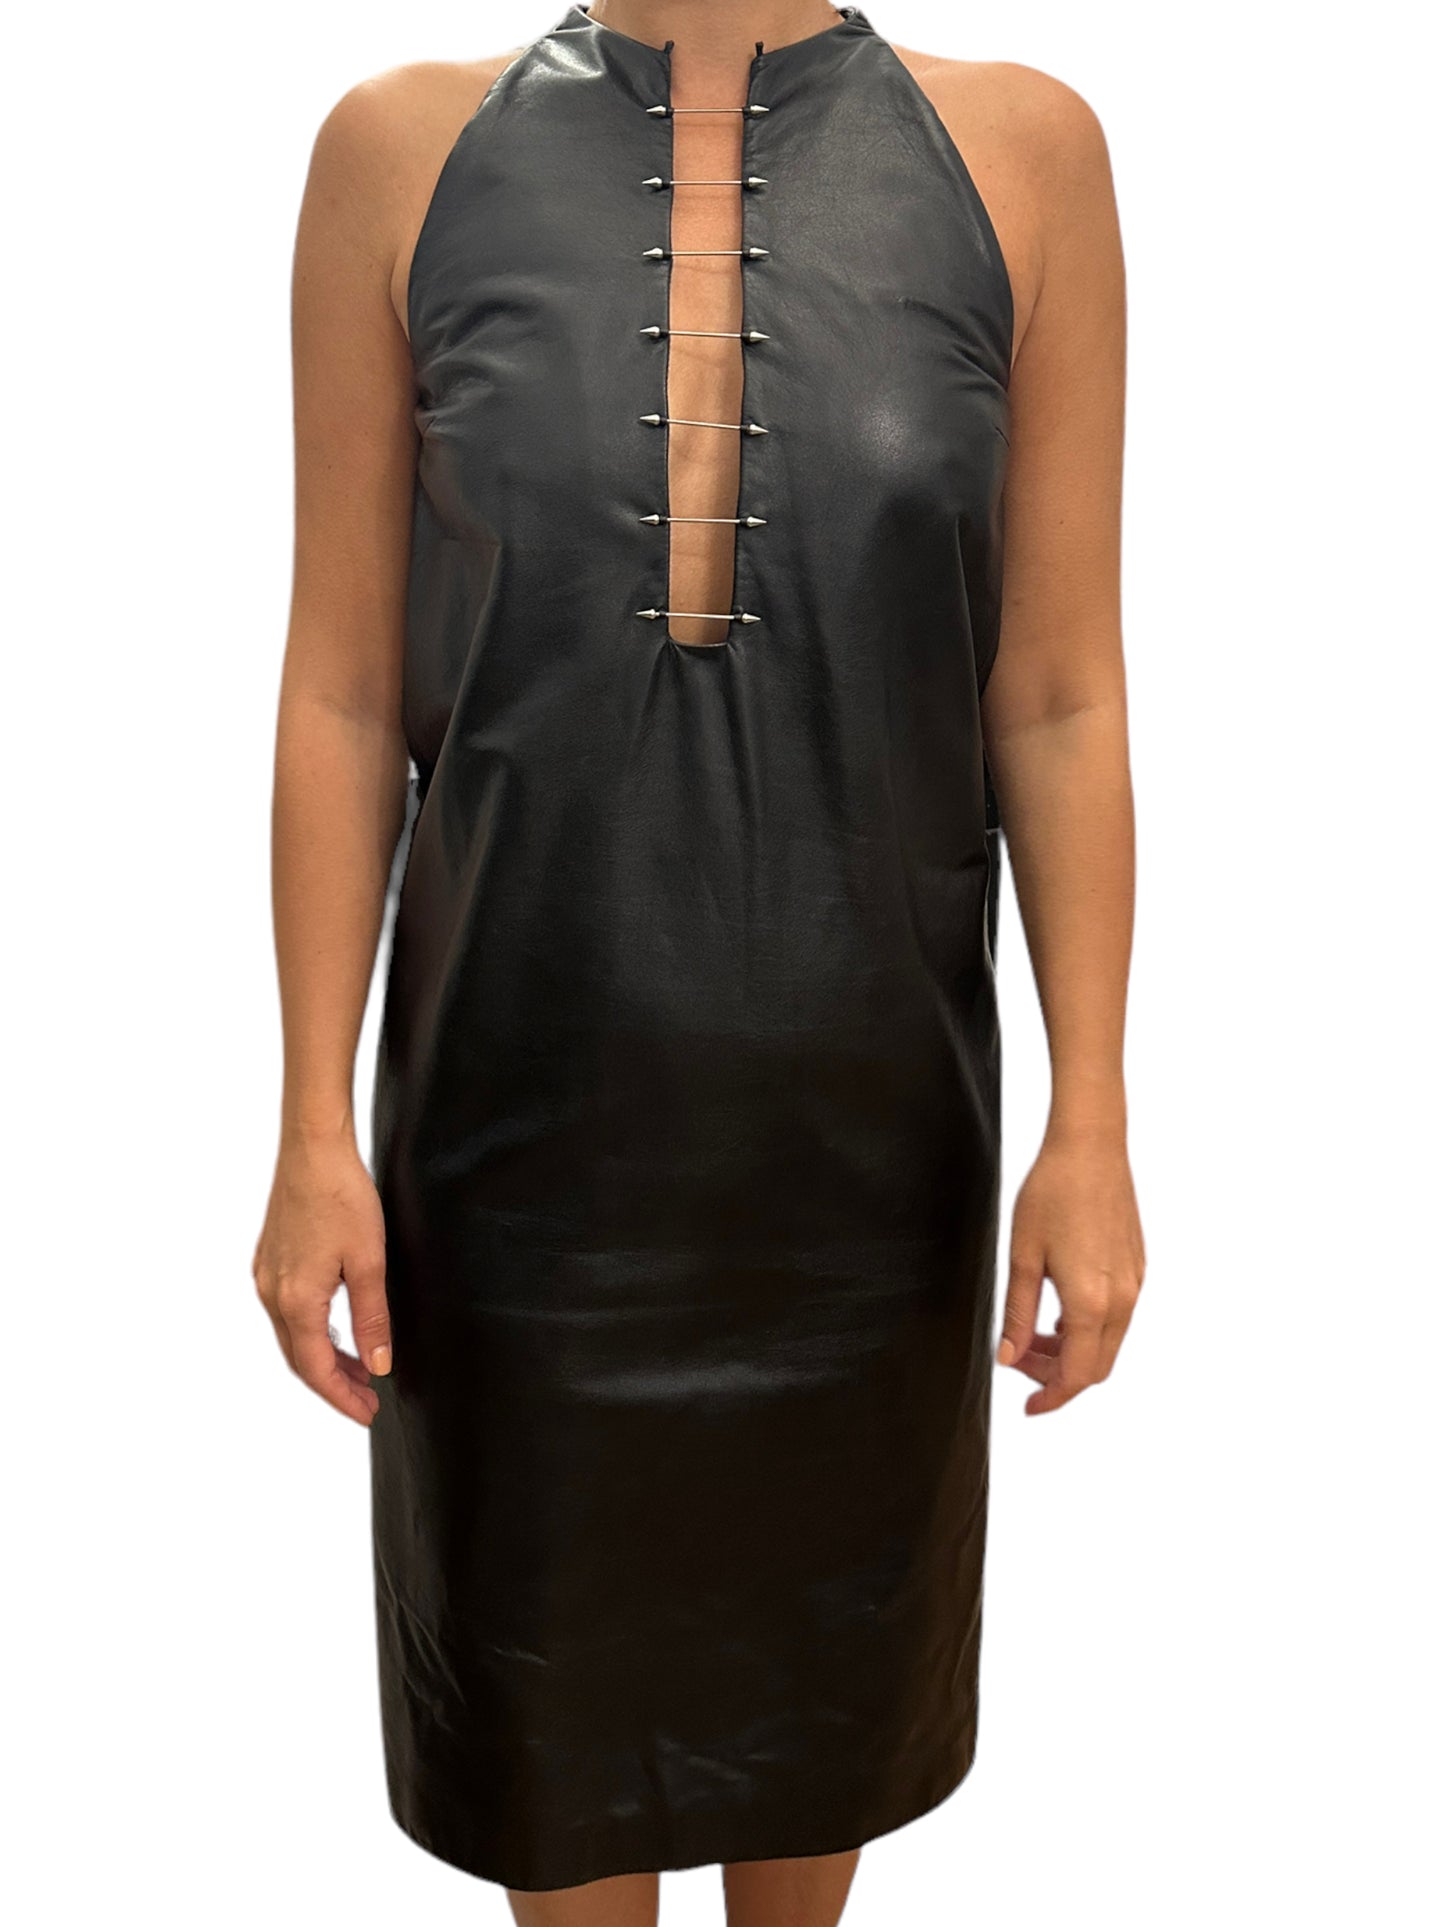 Pritch London - Leather Dress - Size XS/S